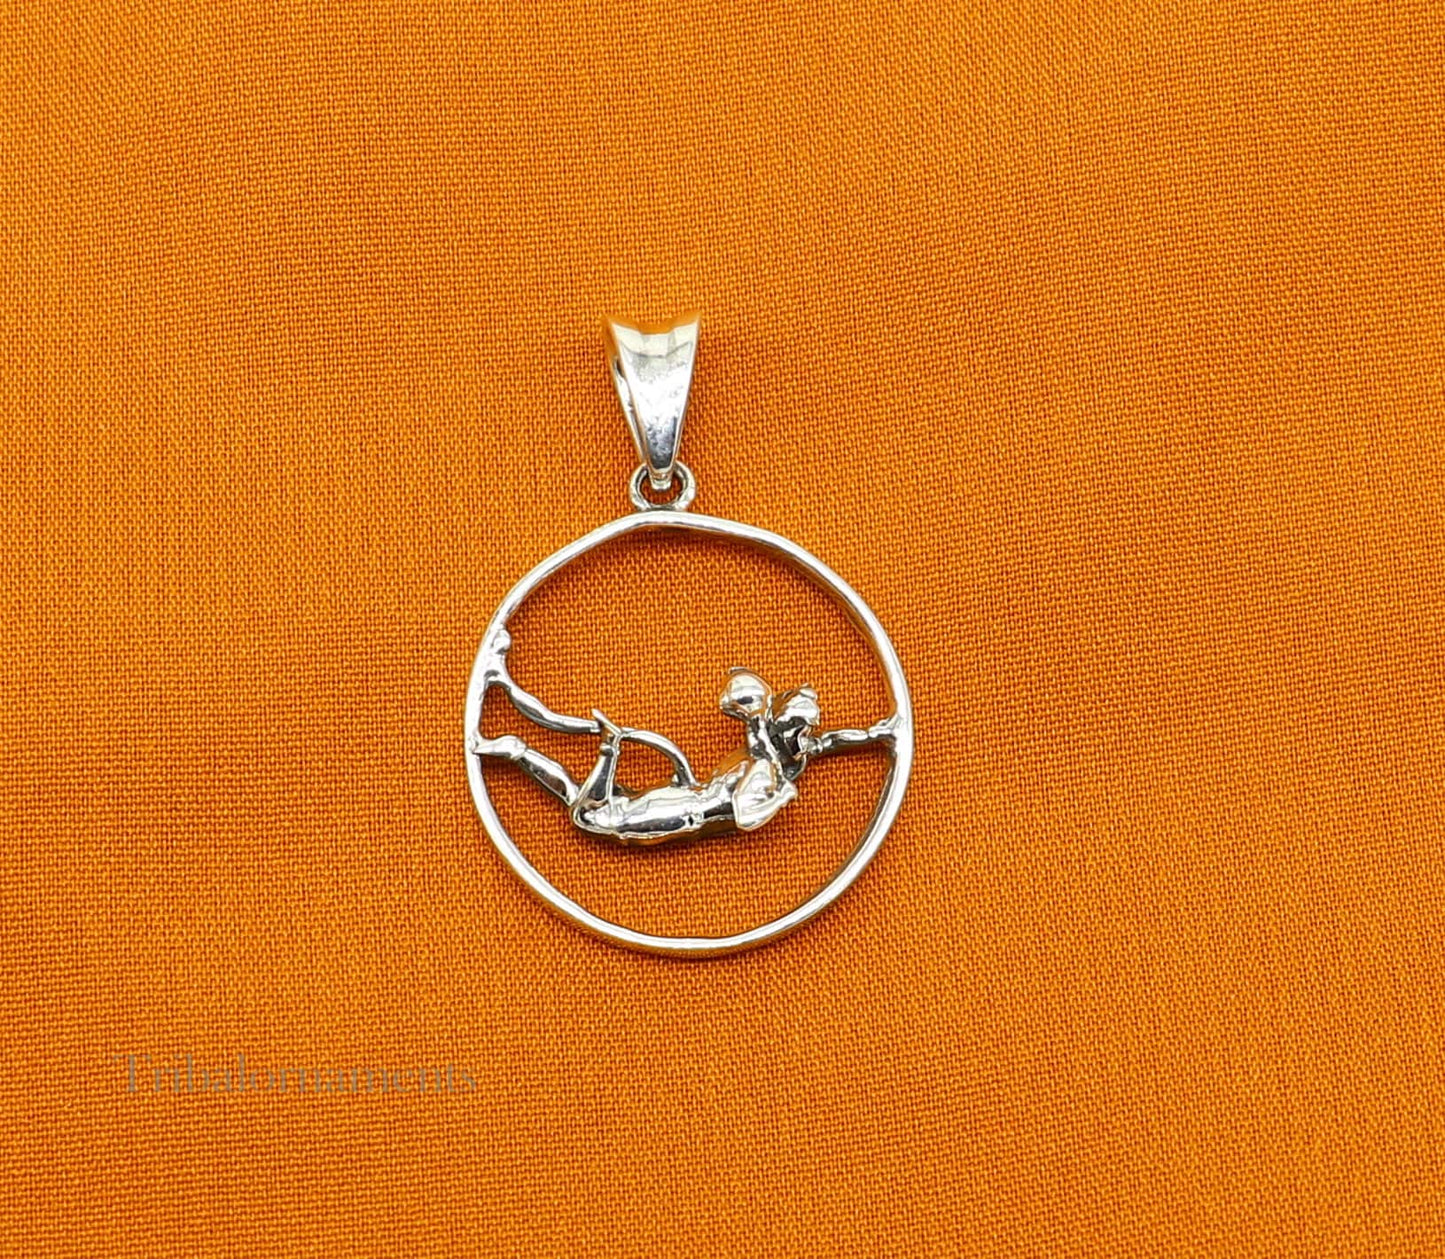 925 sterling silver flying Hindu god Lord Hanuman pendant, bajarangbali sitting fabulous pendant unisex gifting jewelry ssp904 - TRIBAL ORNAMENTS